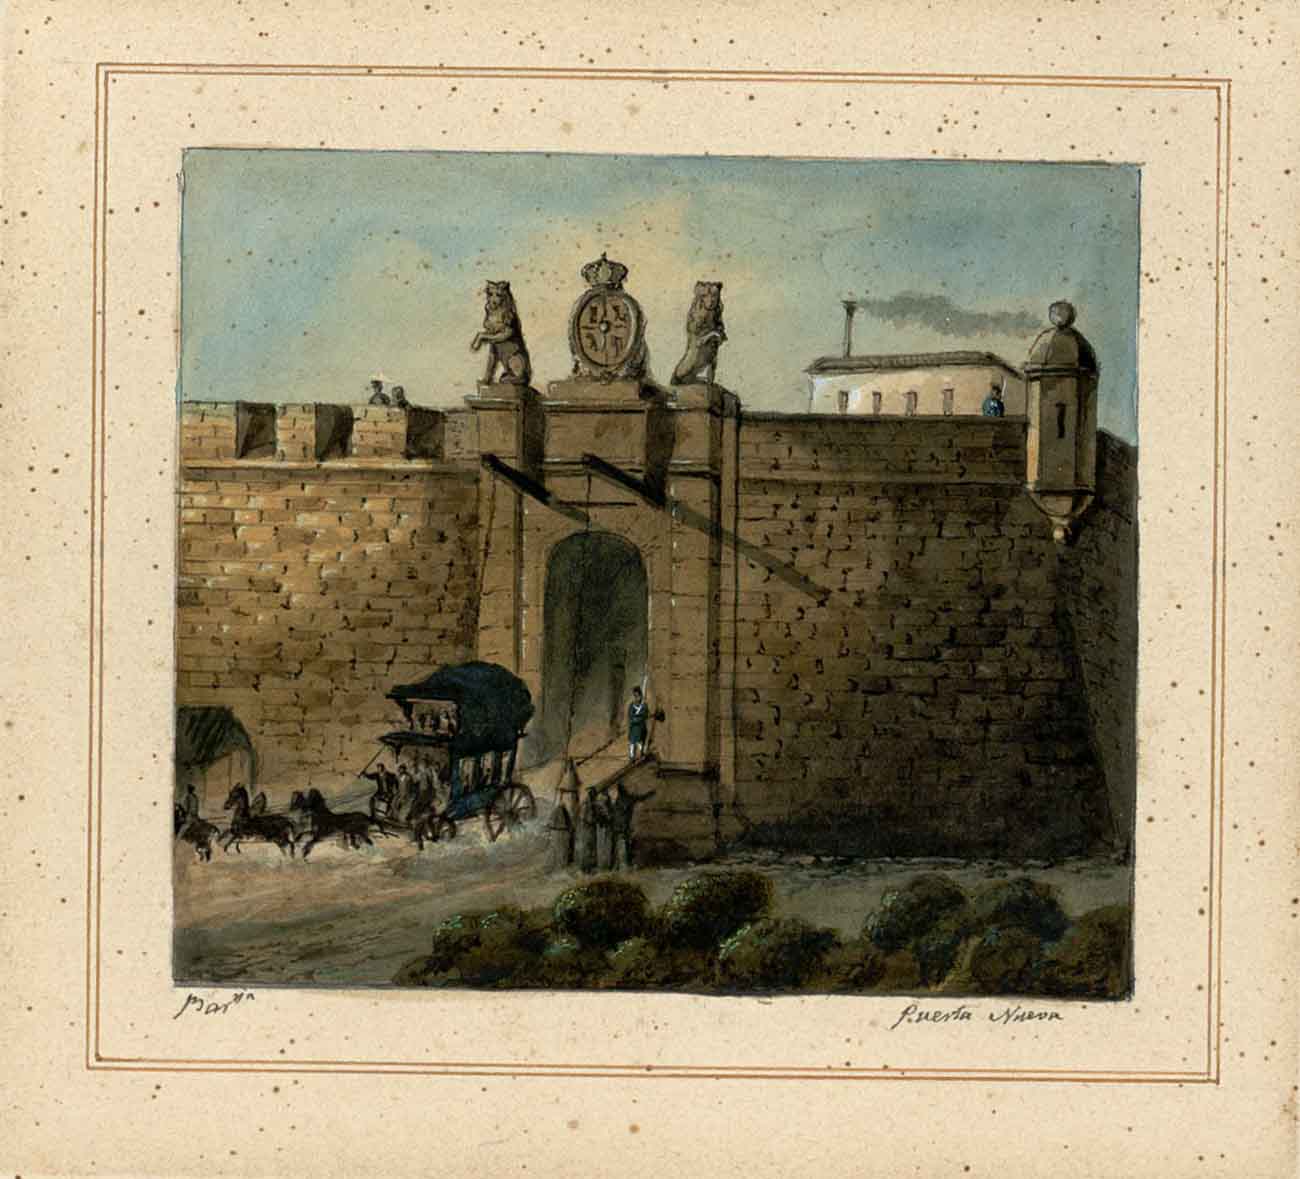 Muralla medieval